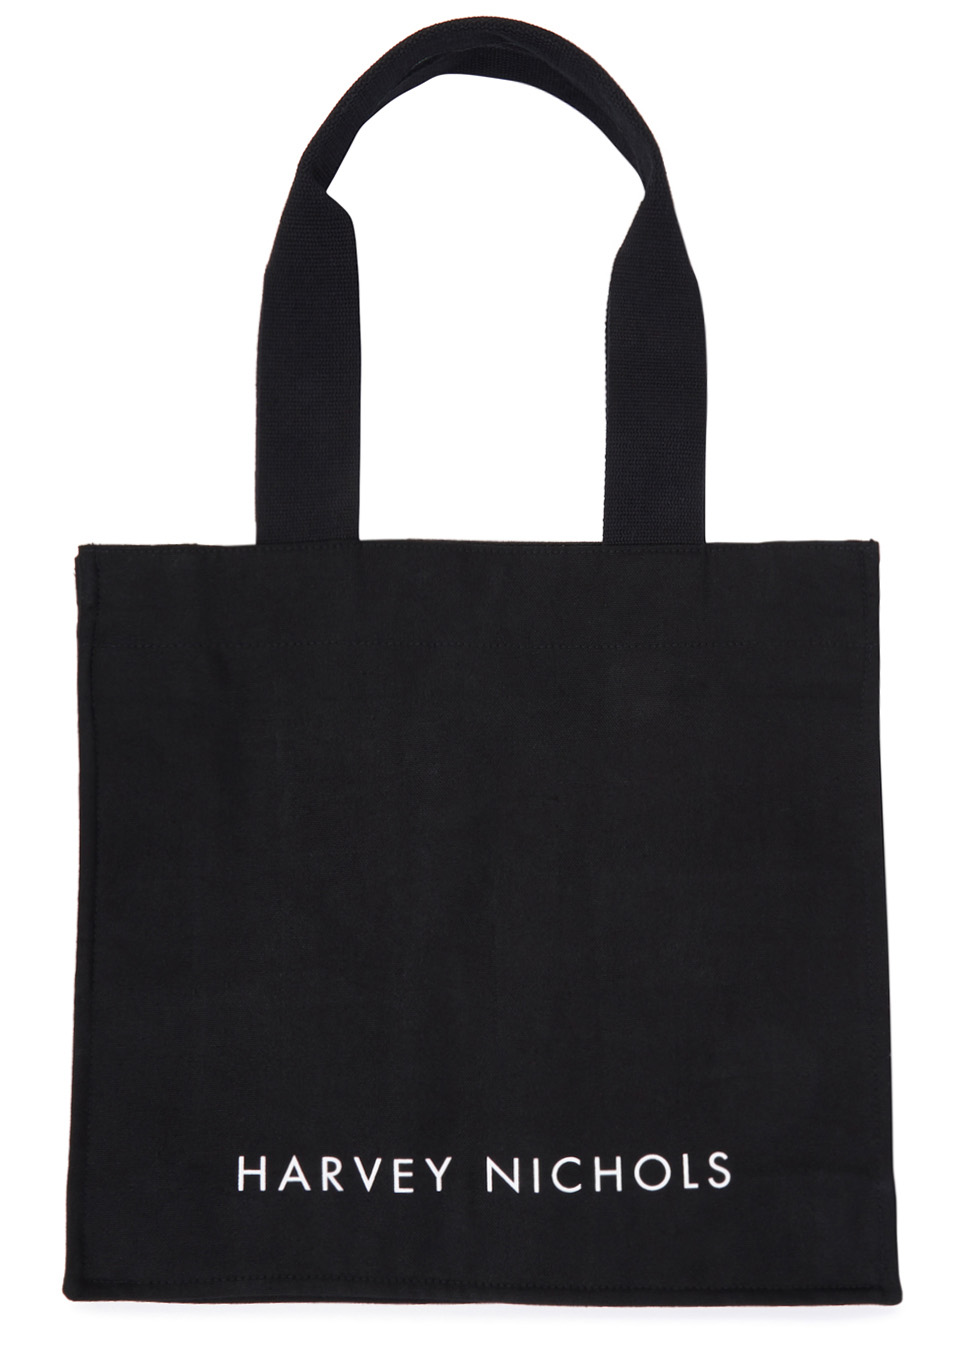 HARVEY NICHOLS Black Canvas Tote Bag